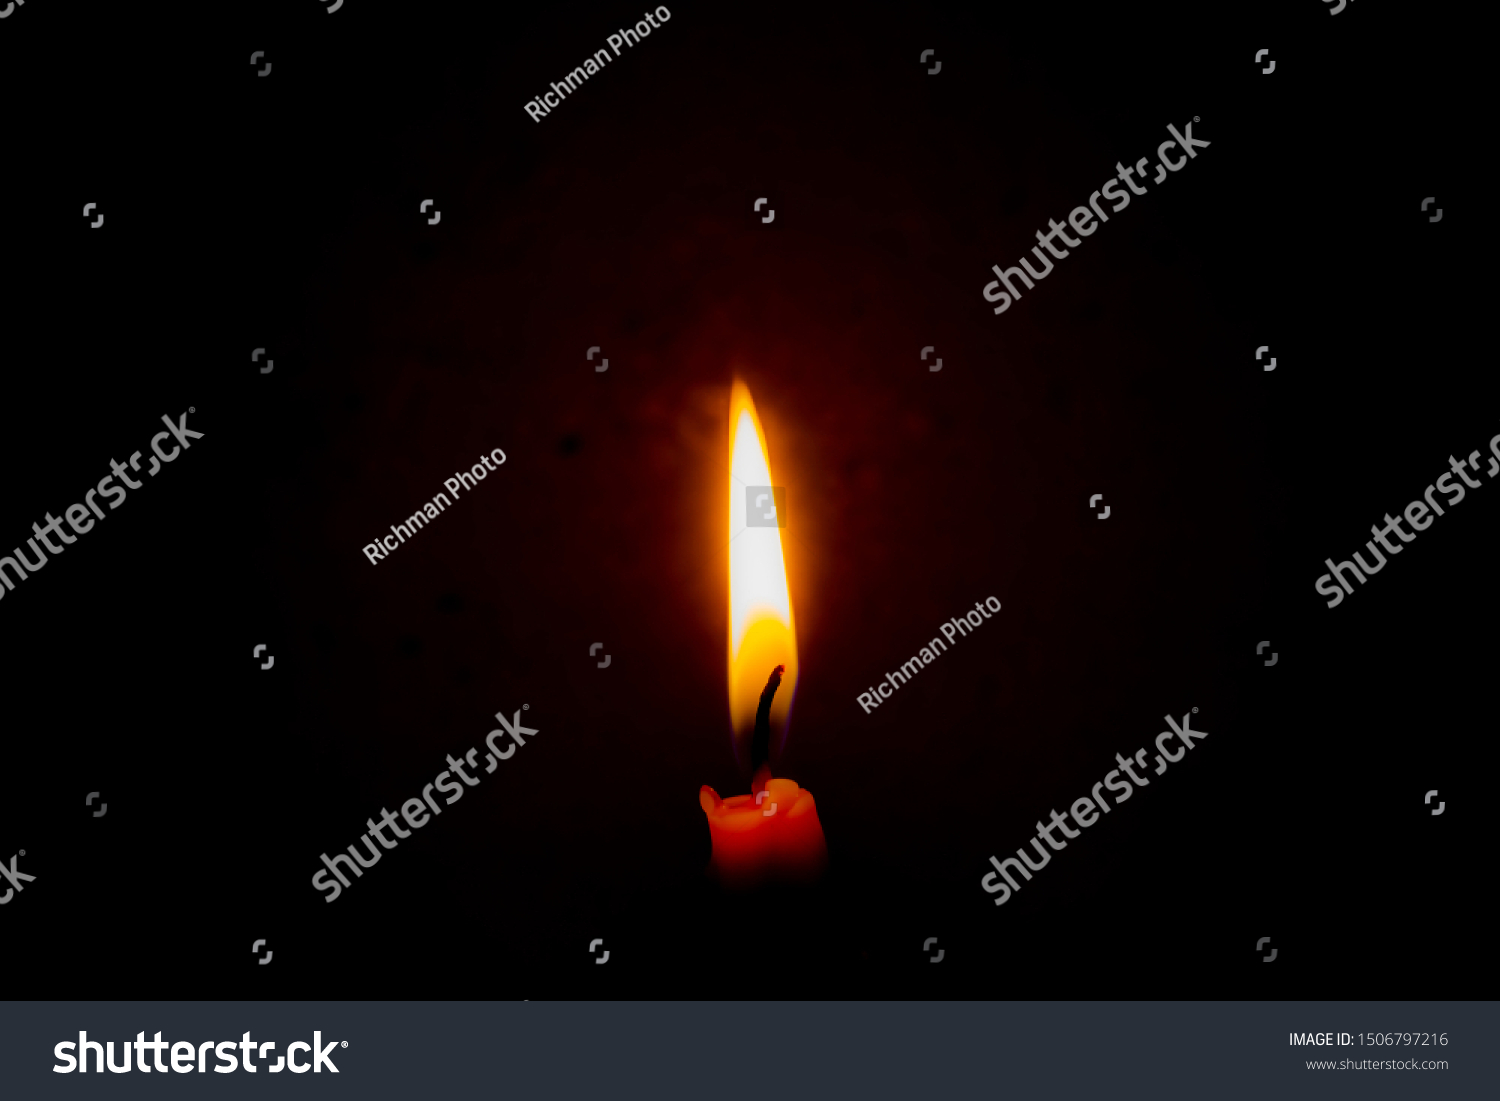 Closeup burning candle in the dark with a dark background. Dark key photo. #1506797216